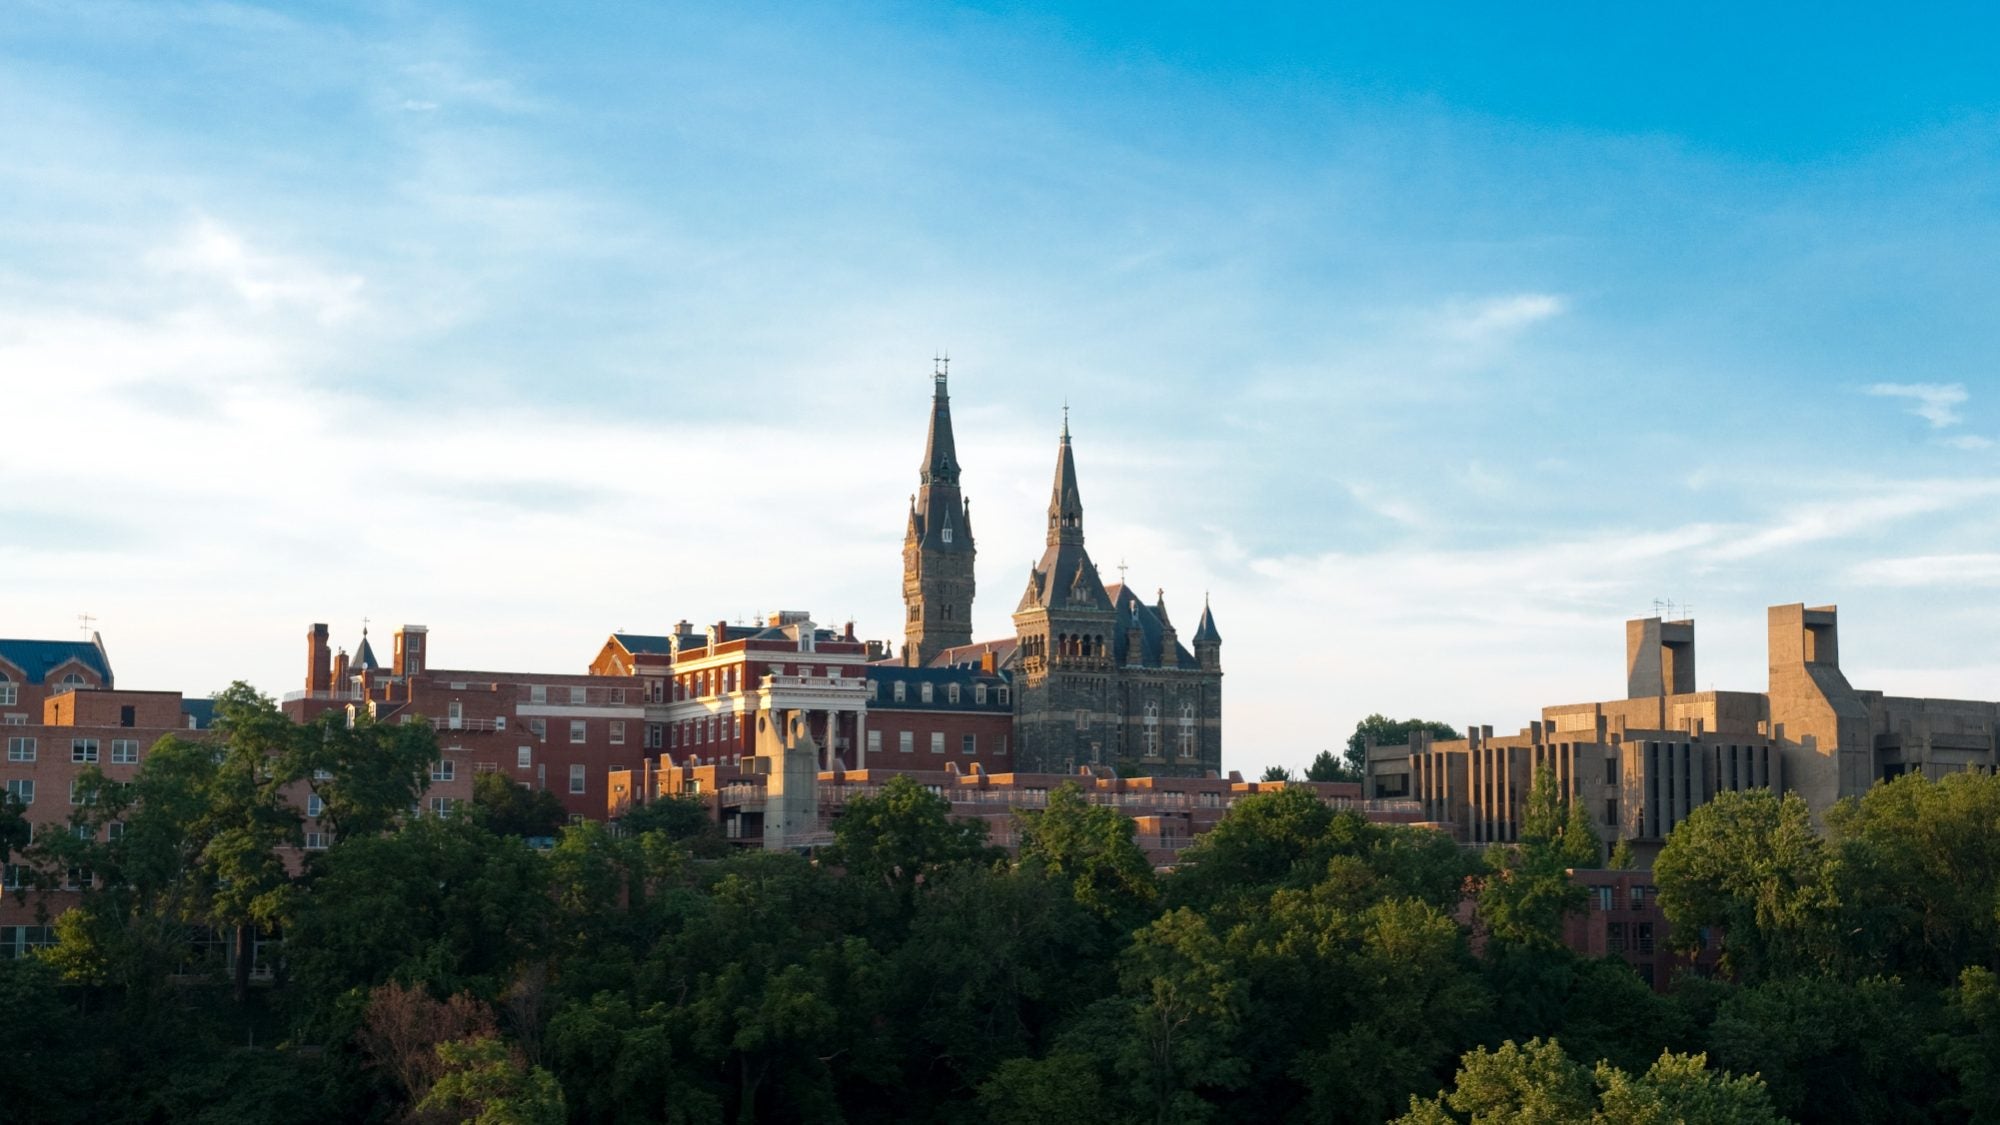 View of Georgetown University from Virginia